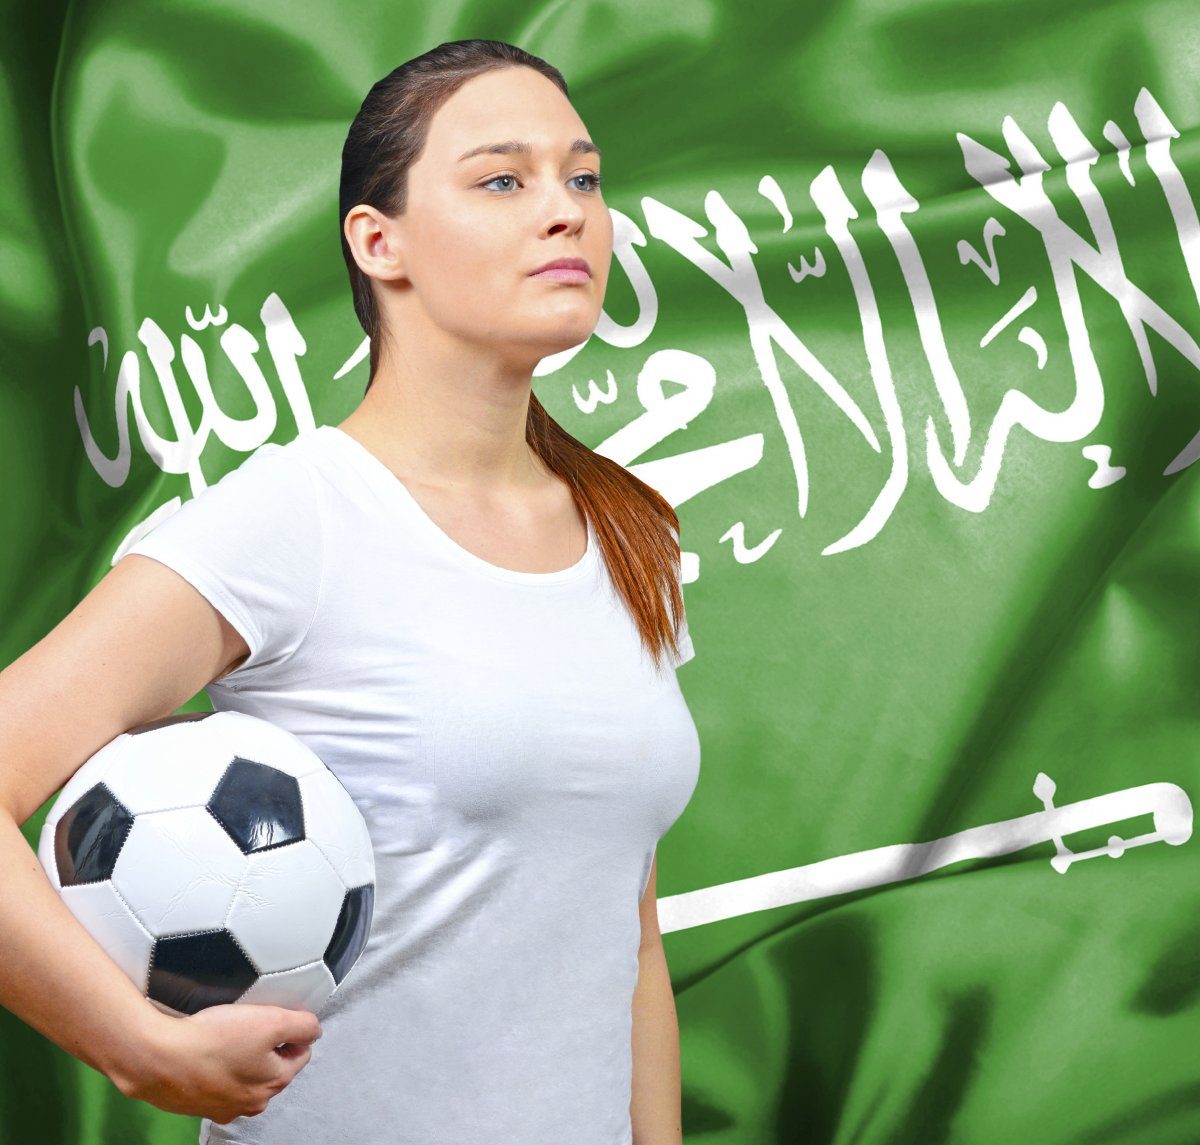 Saudi Female Football Fan